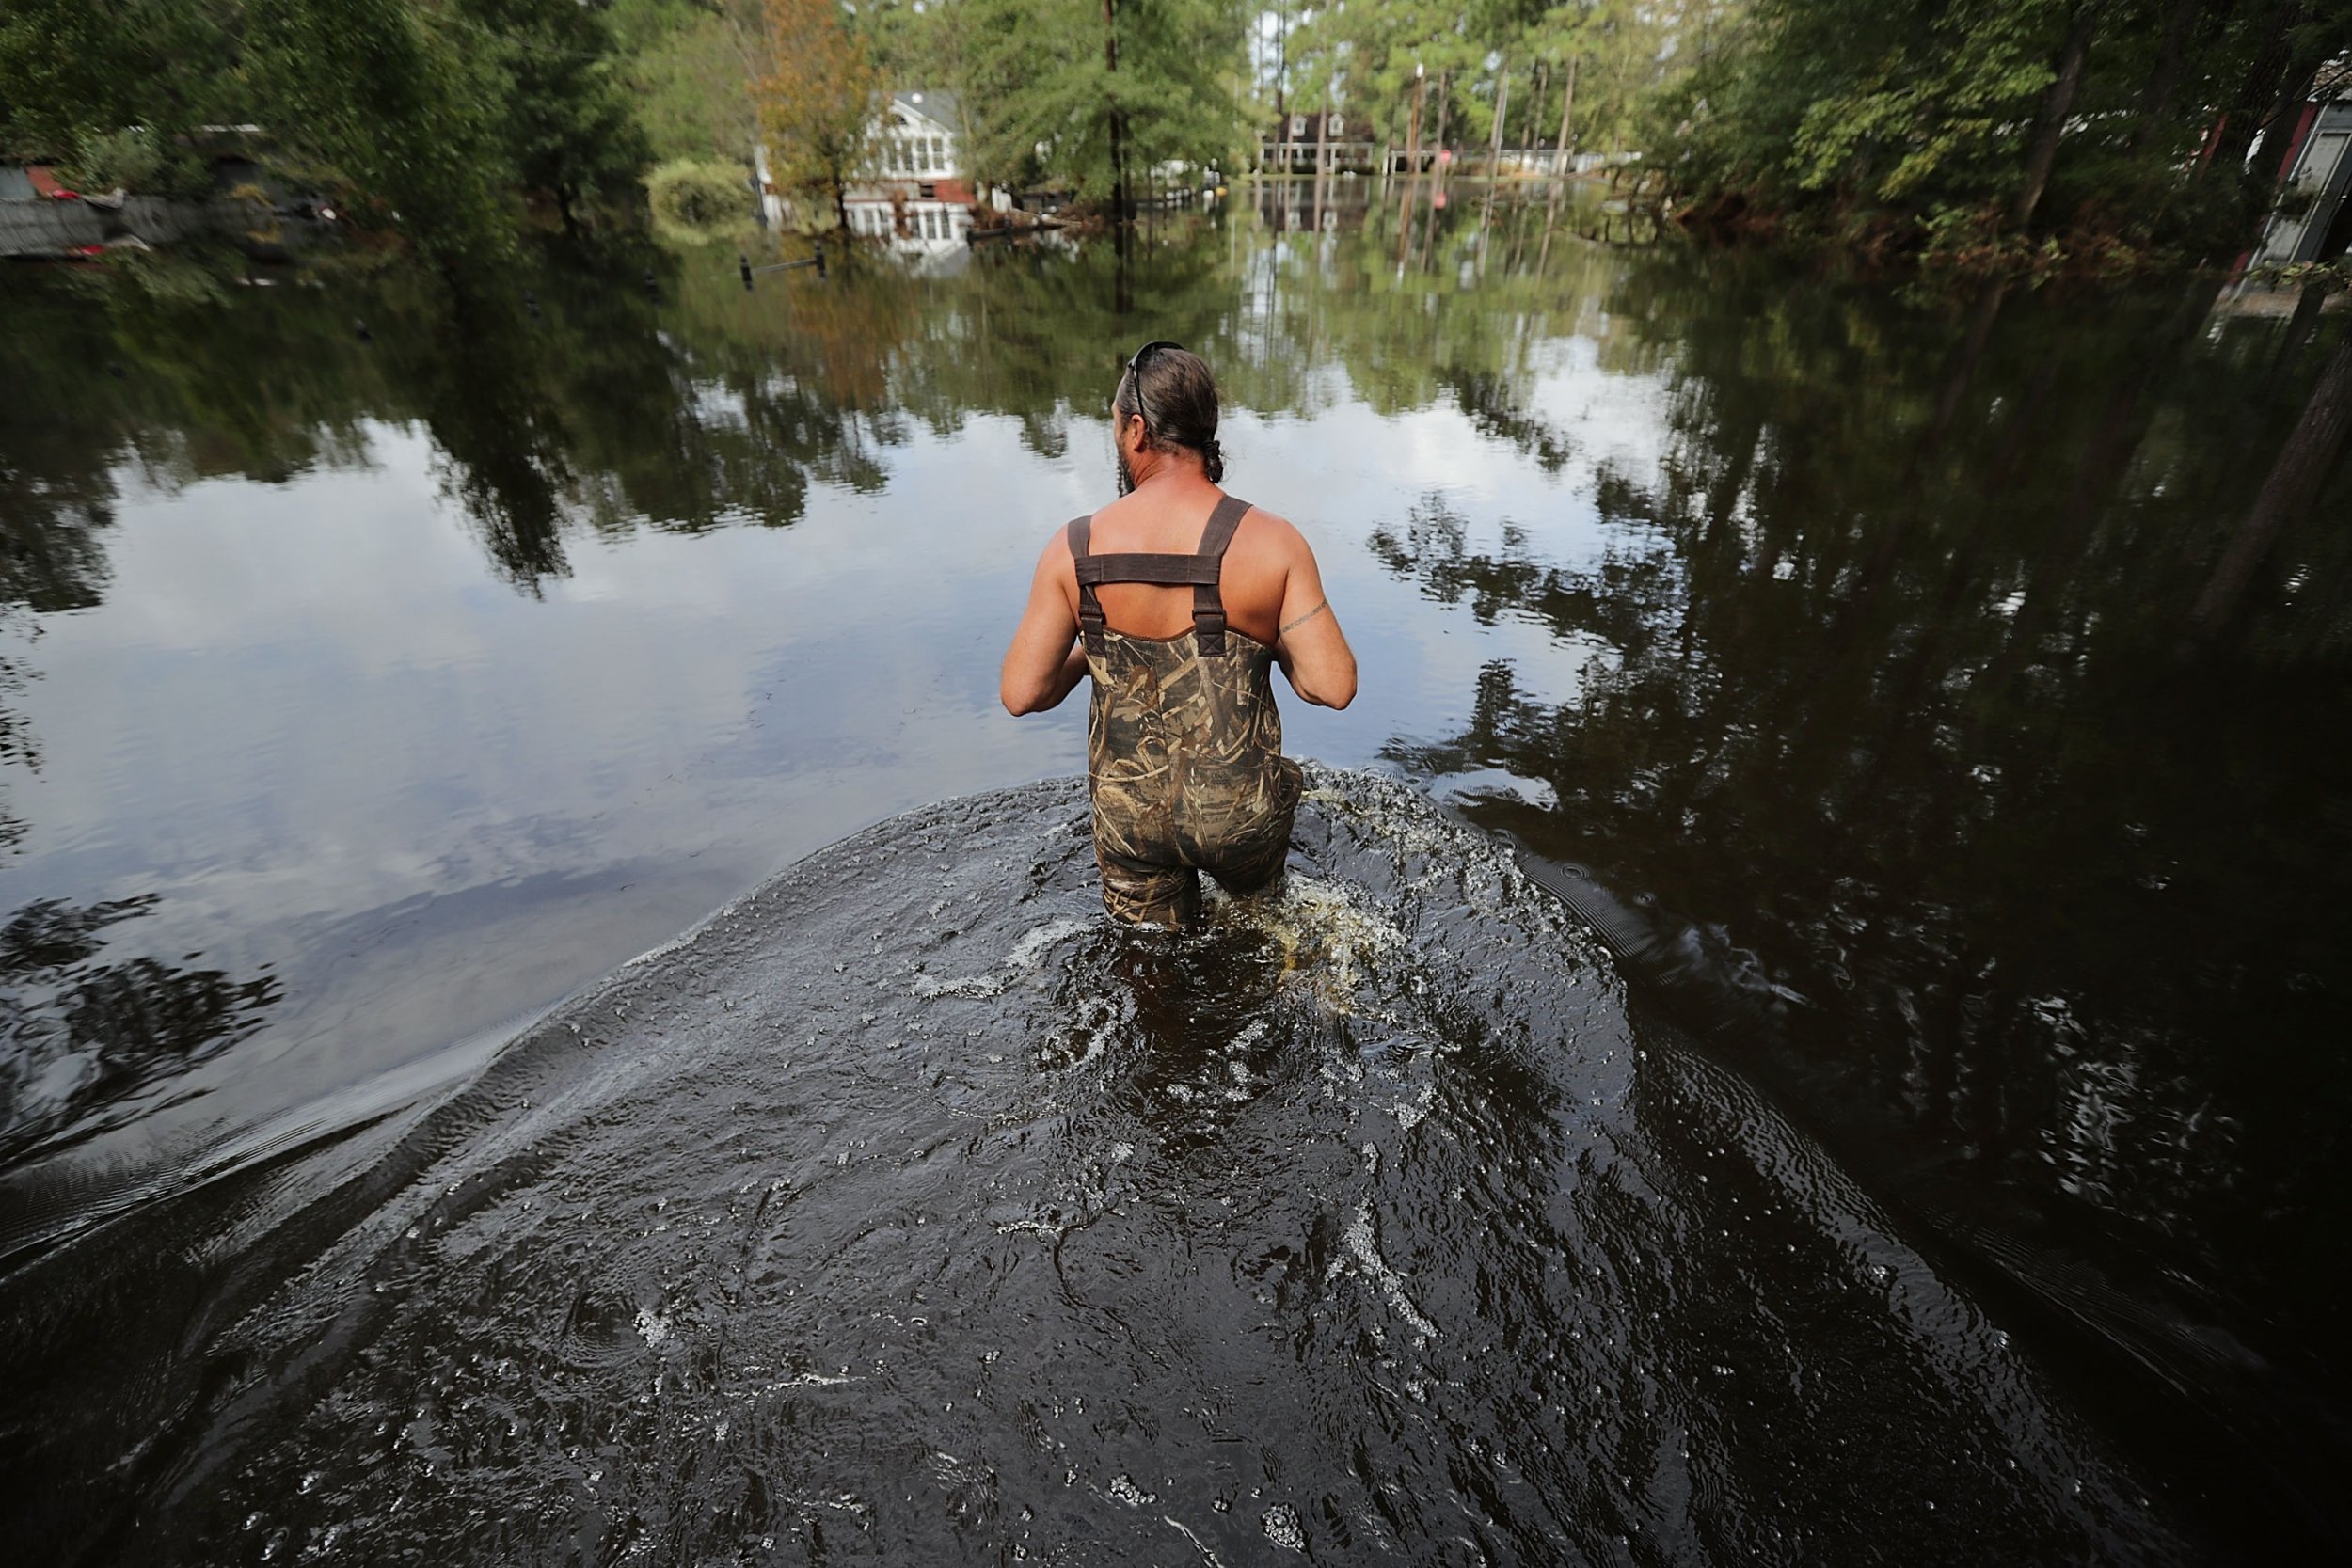 North Carolina flooding